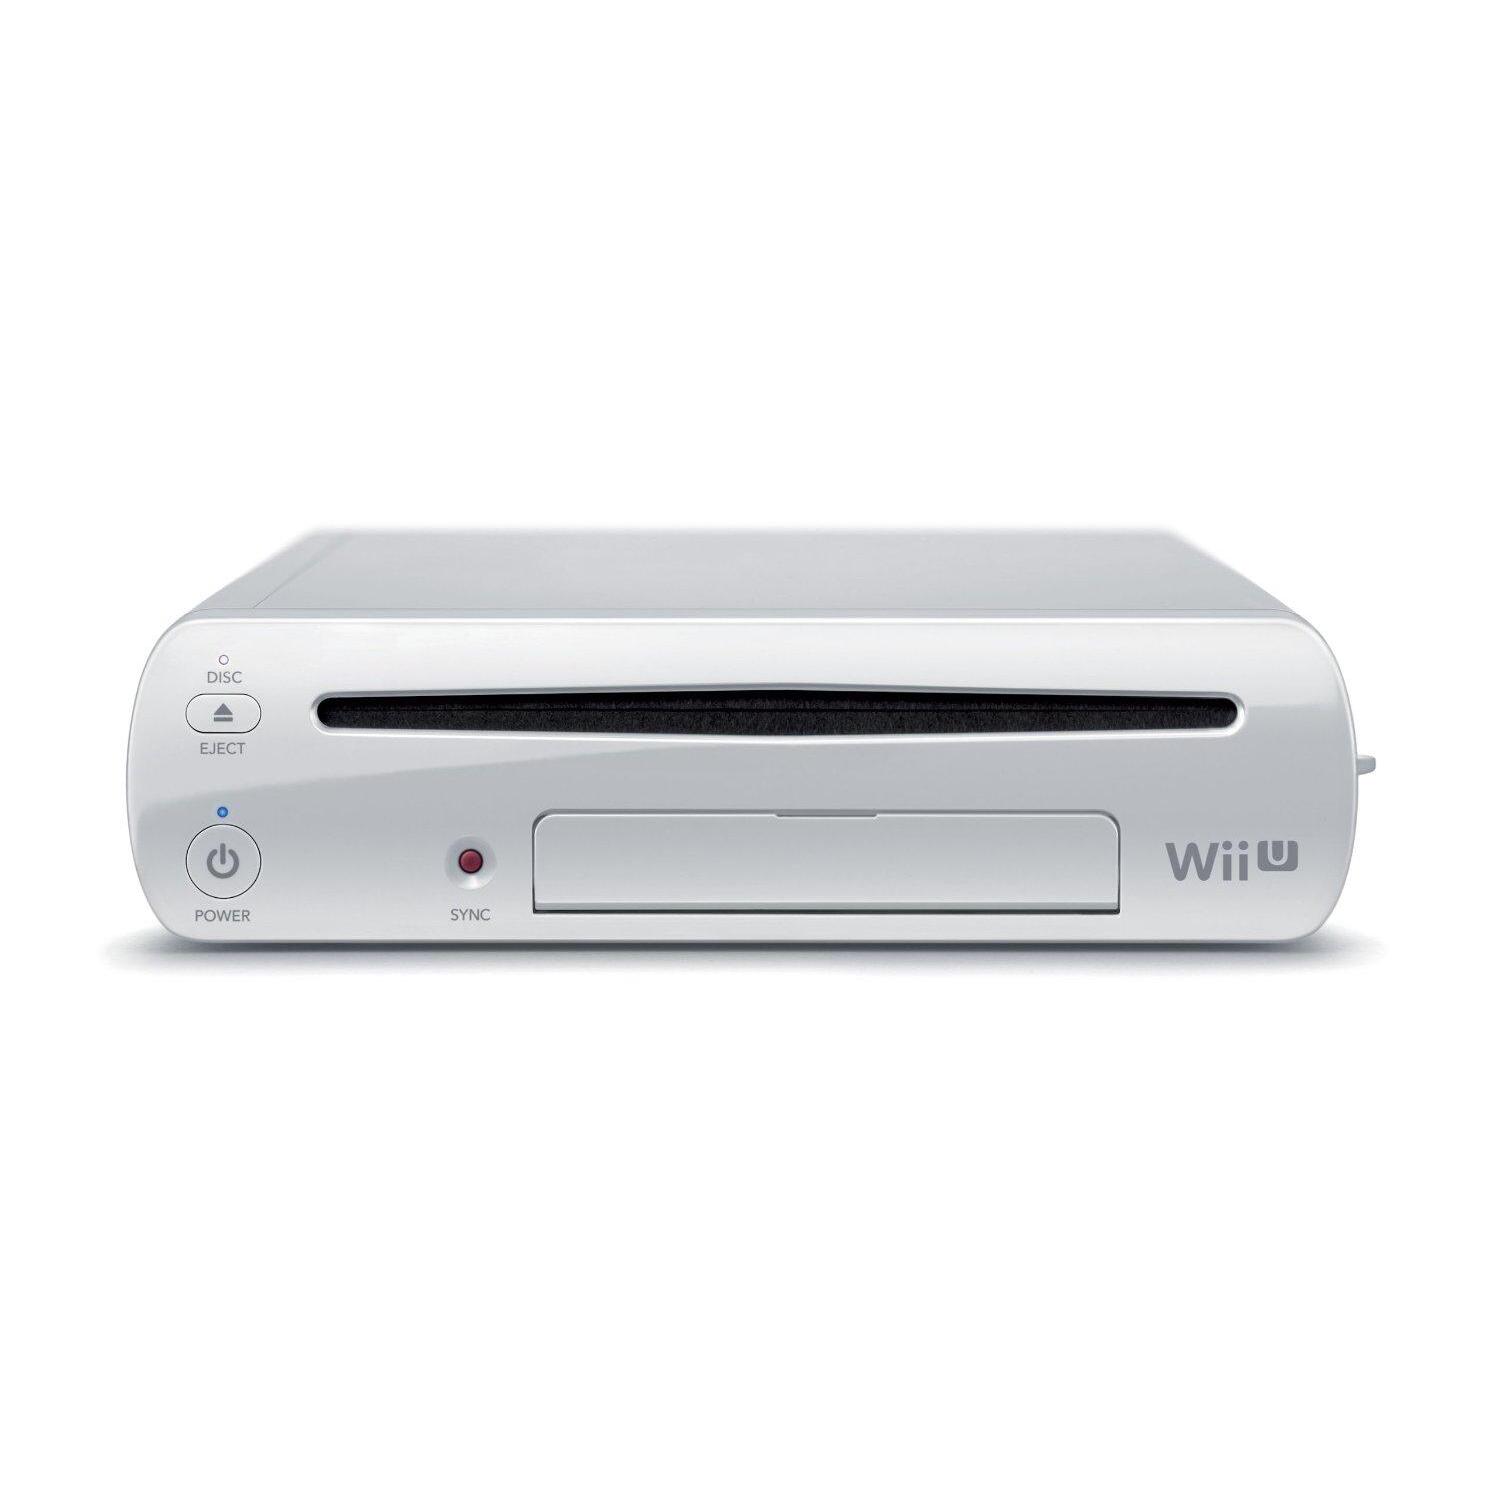 Overtekenen toediening spoelen Wii U Console (8GB / 16GB) - Wit (Wii) kopen - €54